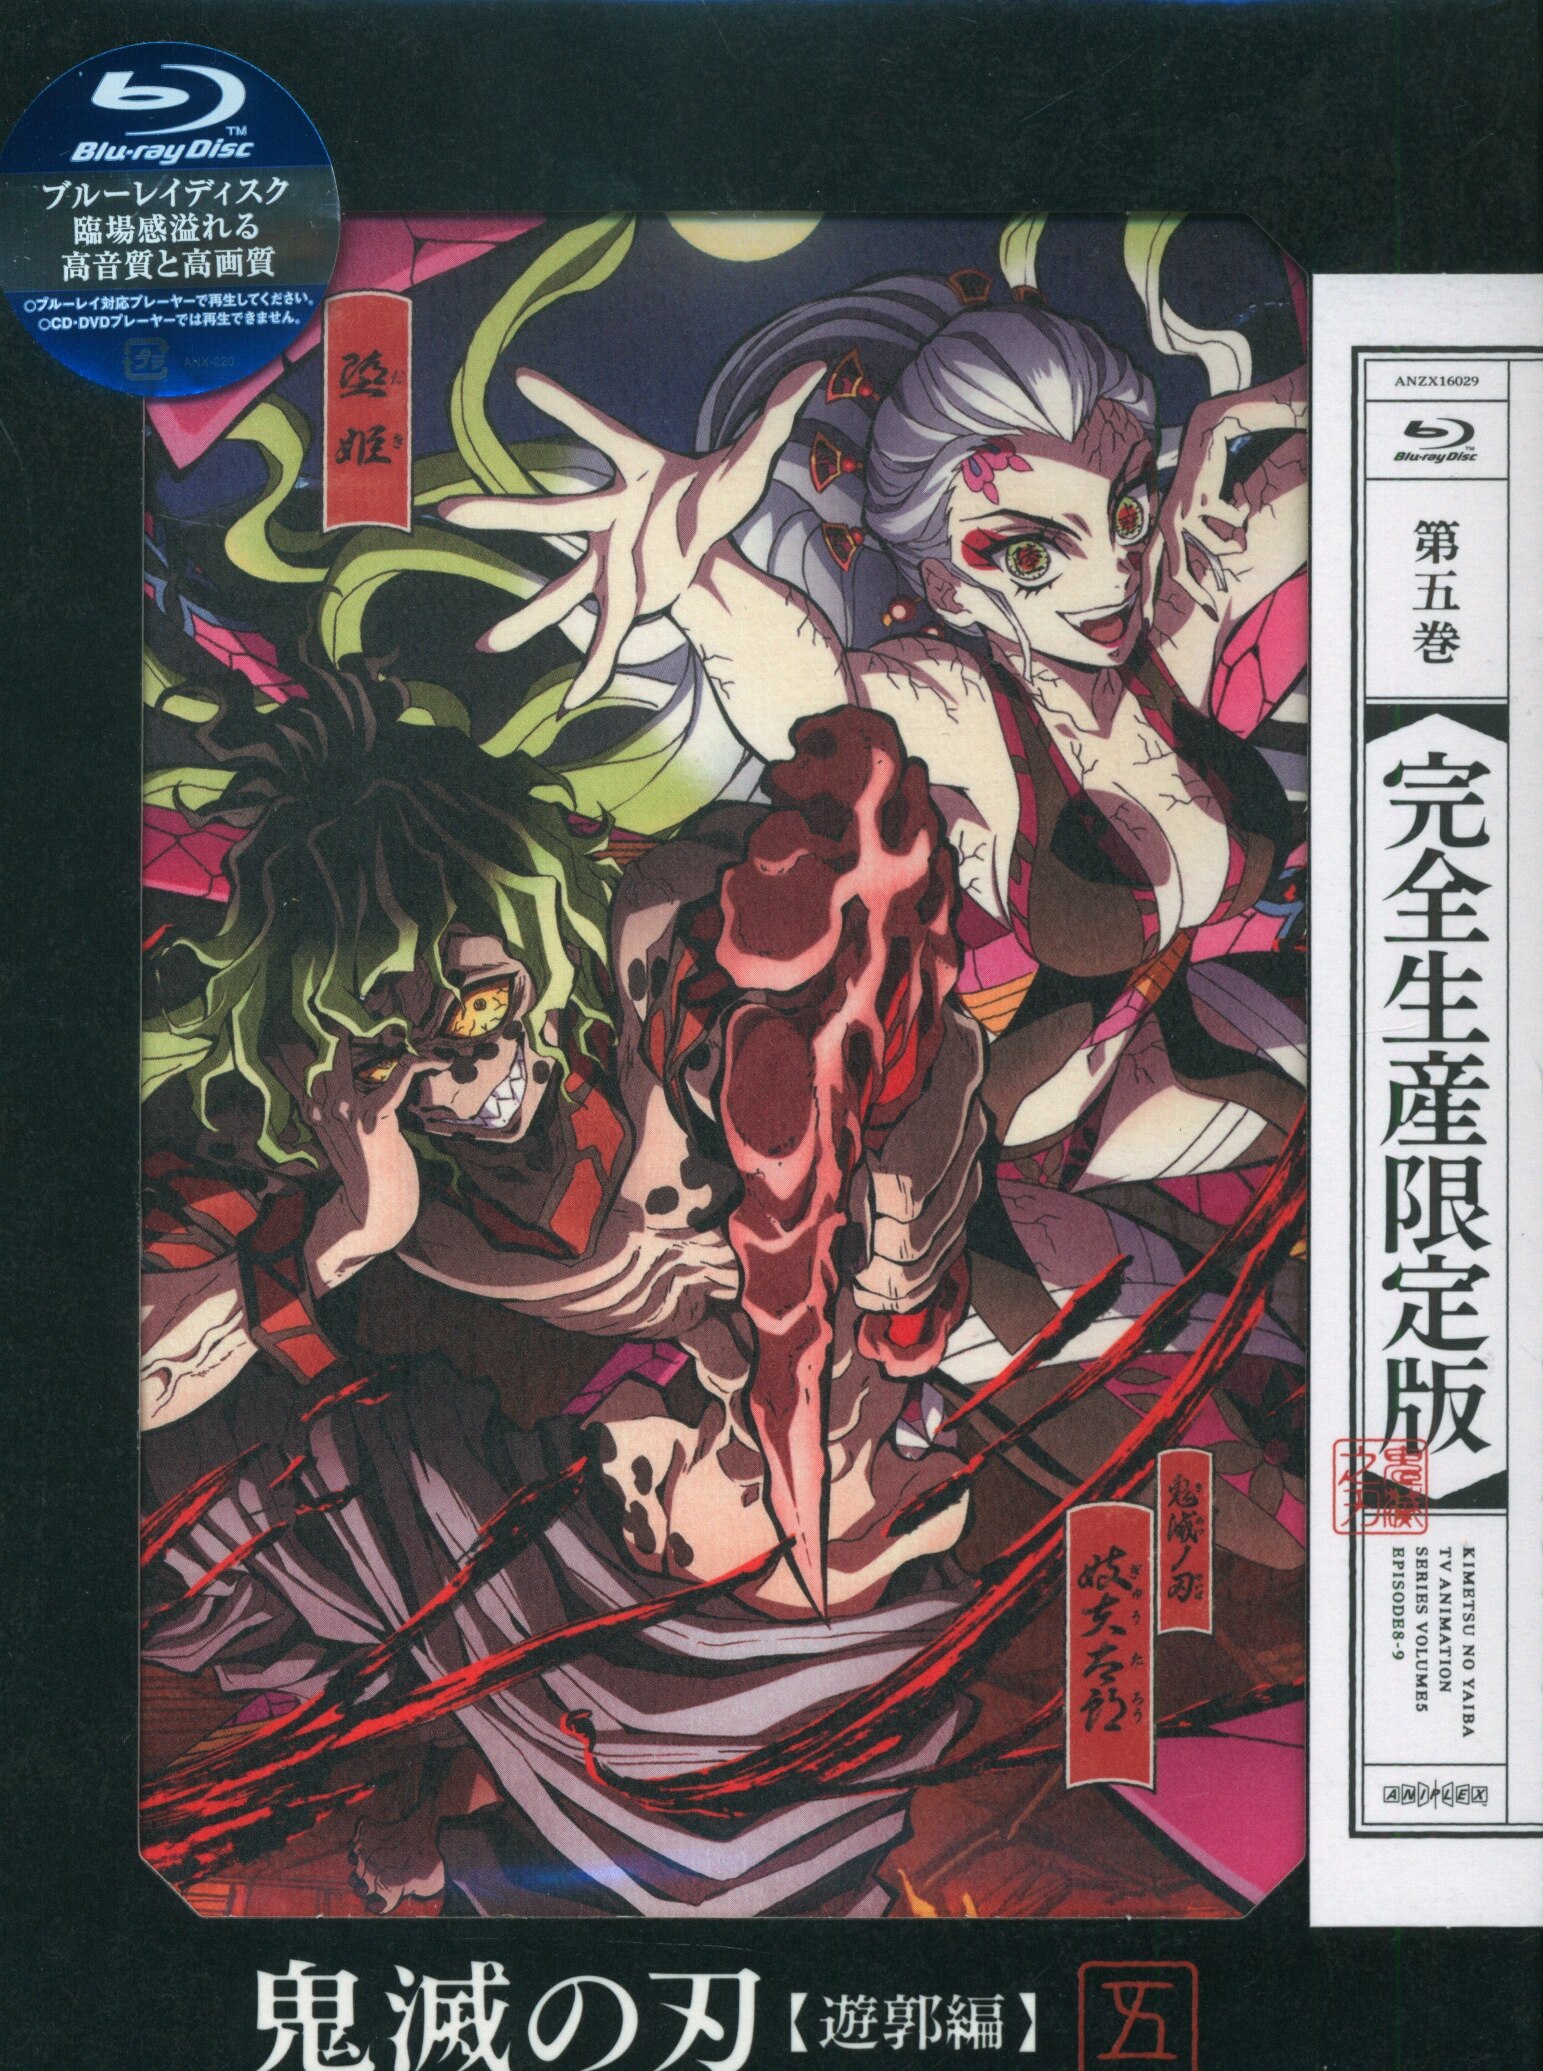 Animation - Demon Slayer: Kimetsu No Yaiba 9 [Ltd.] - Japanese DVD - Music